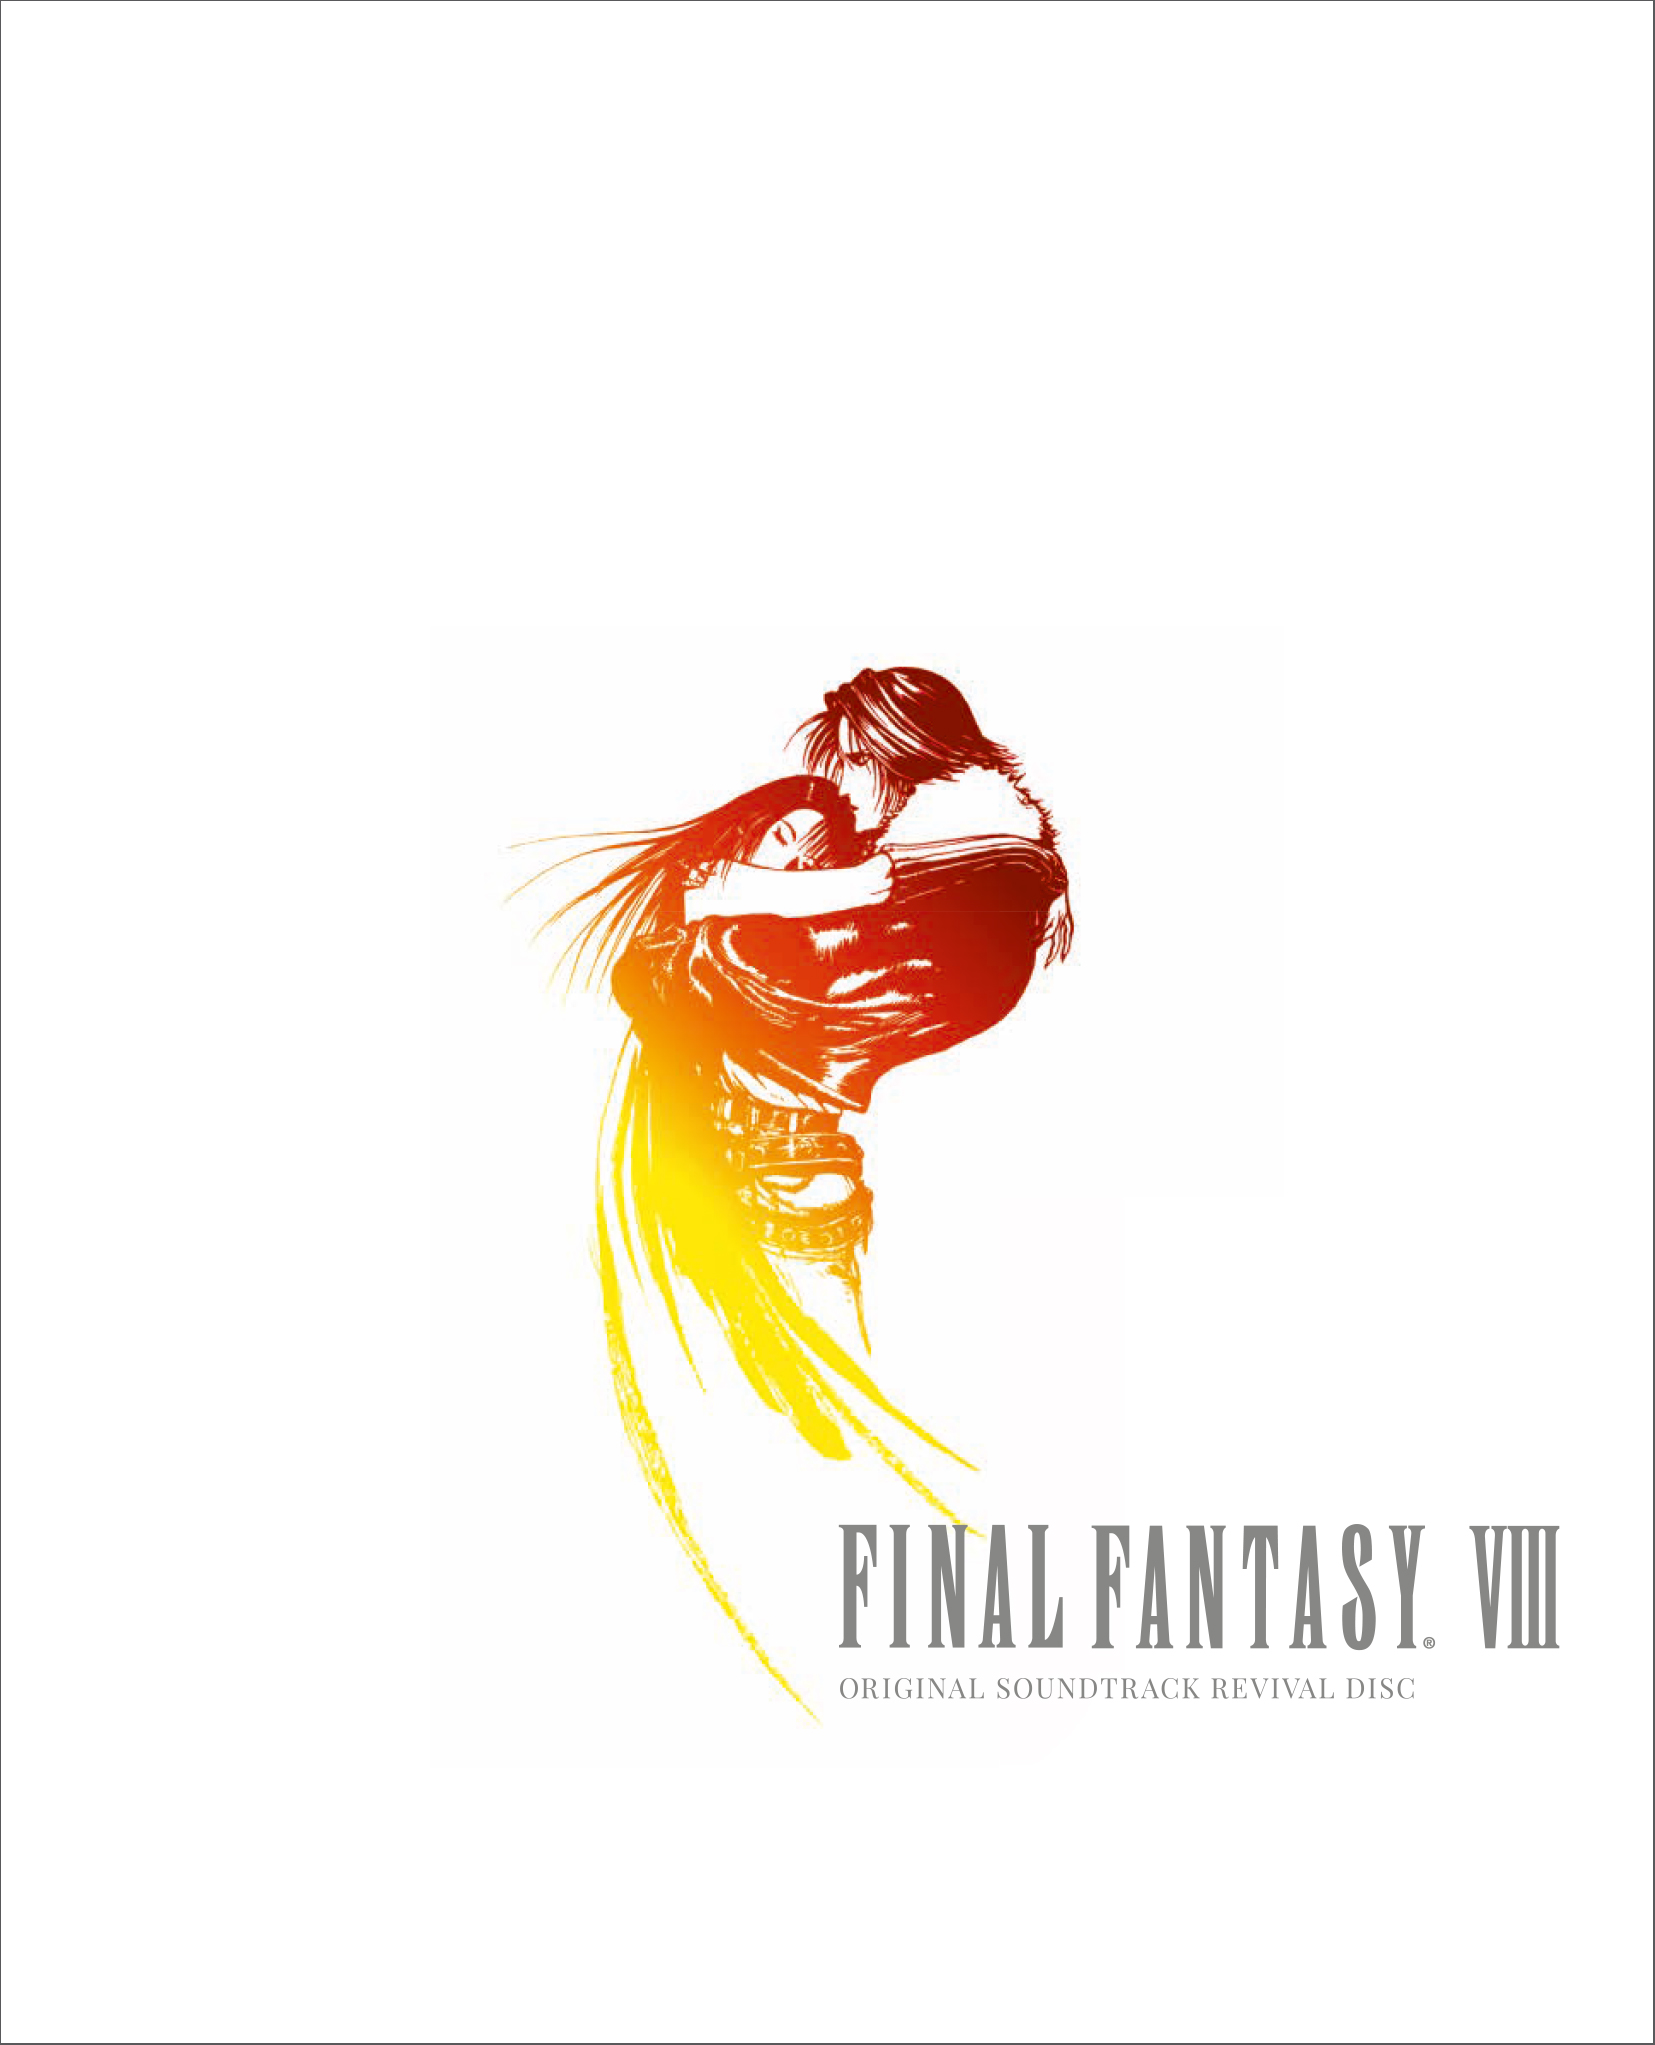 2019-12-4-final-fantasy-viii-original-soundtrack-revival-disc